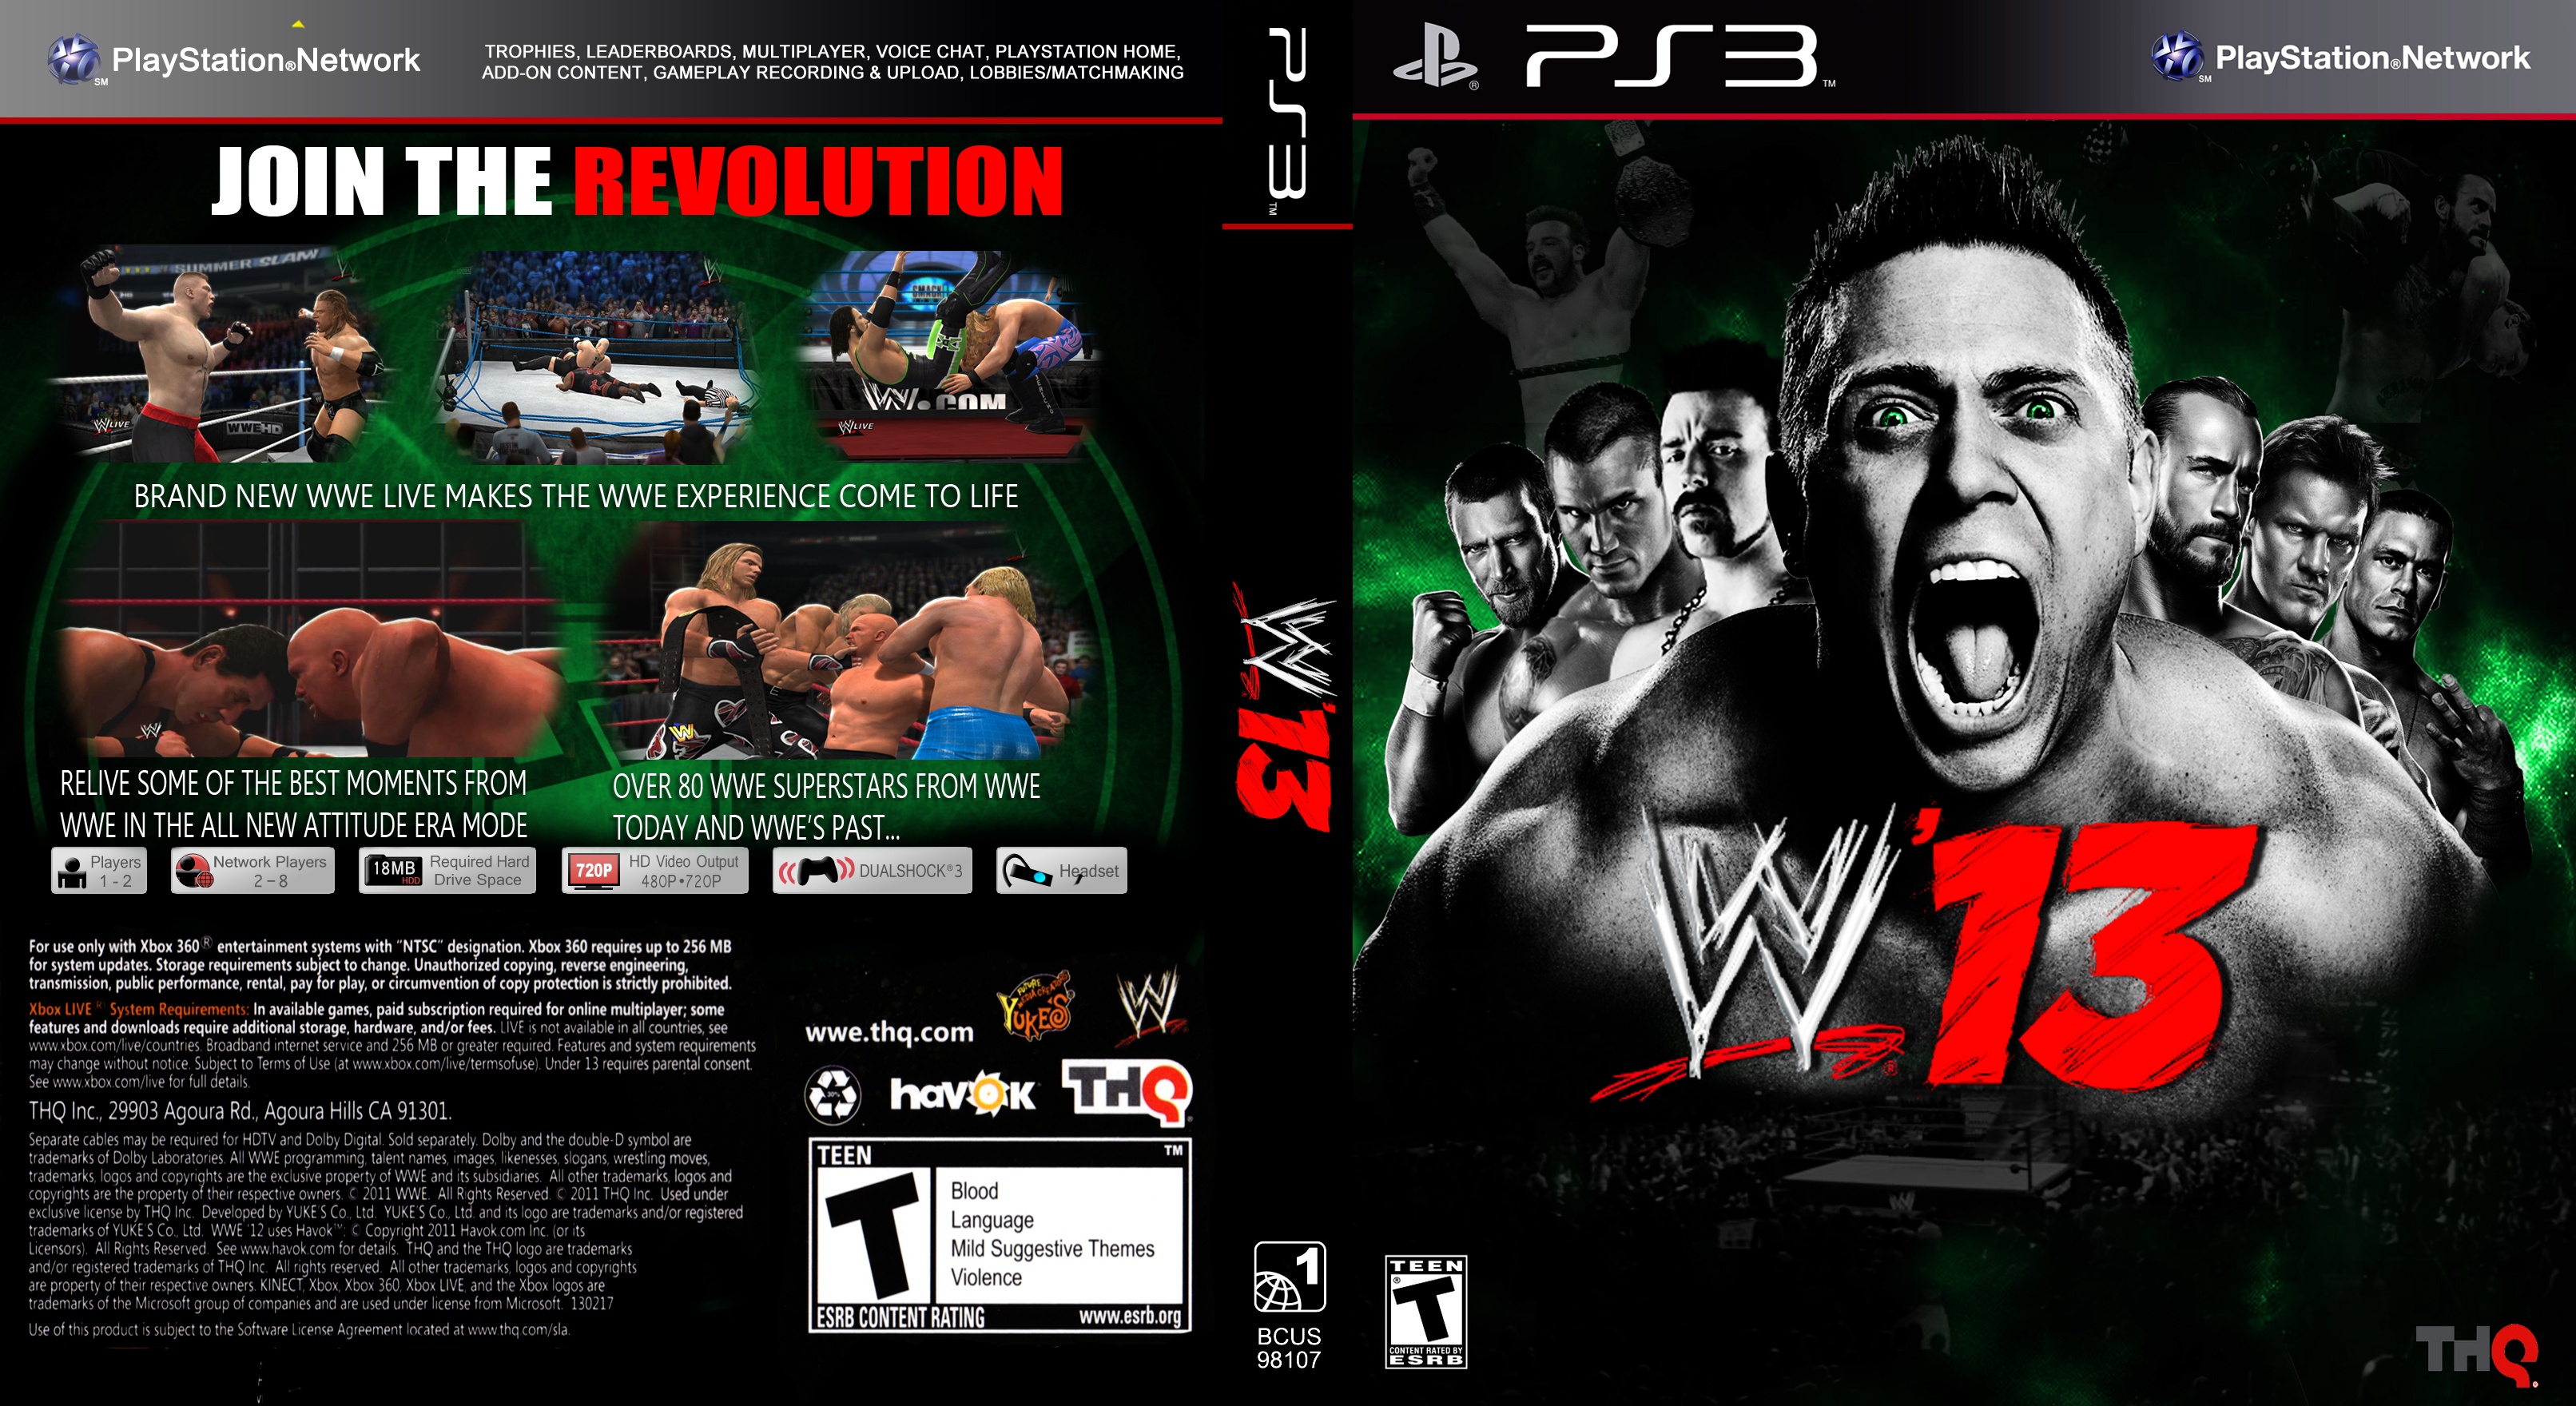 WWE 13 box cover